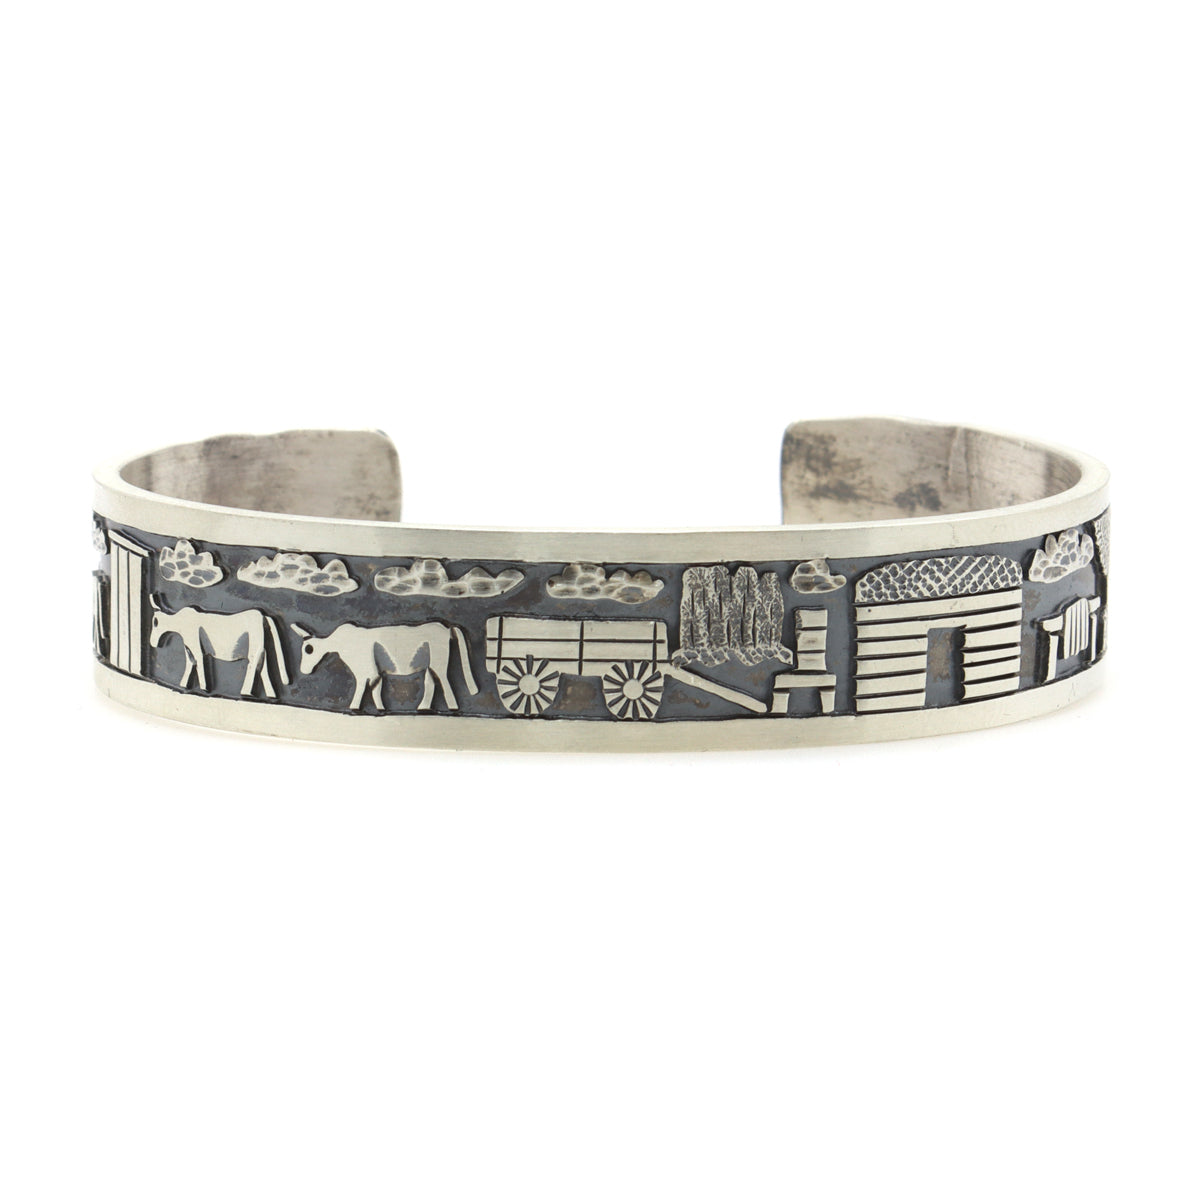 Roland Begay - Navajo Contemporary Sterling Silver Storyteller Bracelet with Stamped Design, size 6.5 (J13219)
